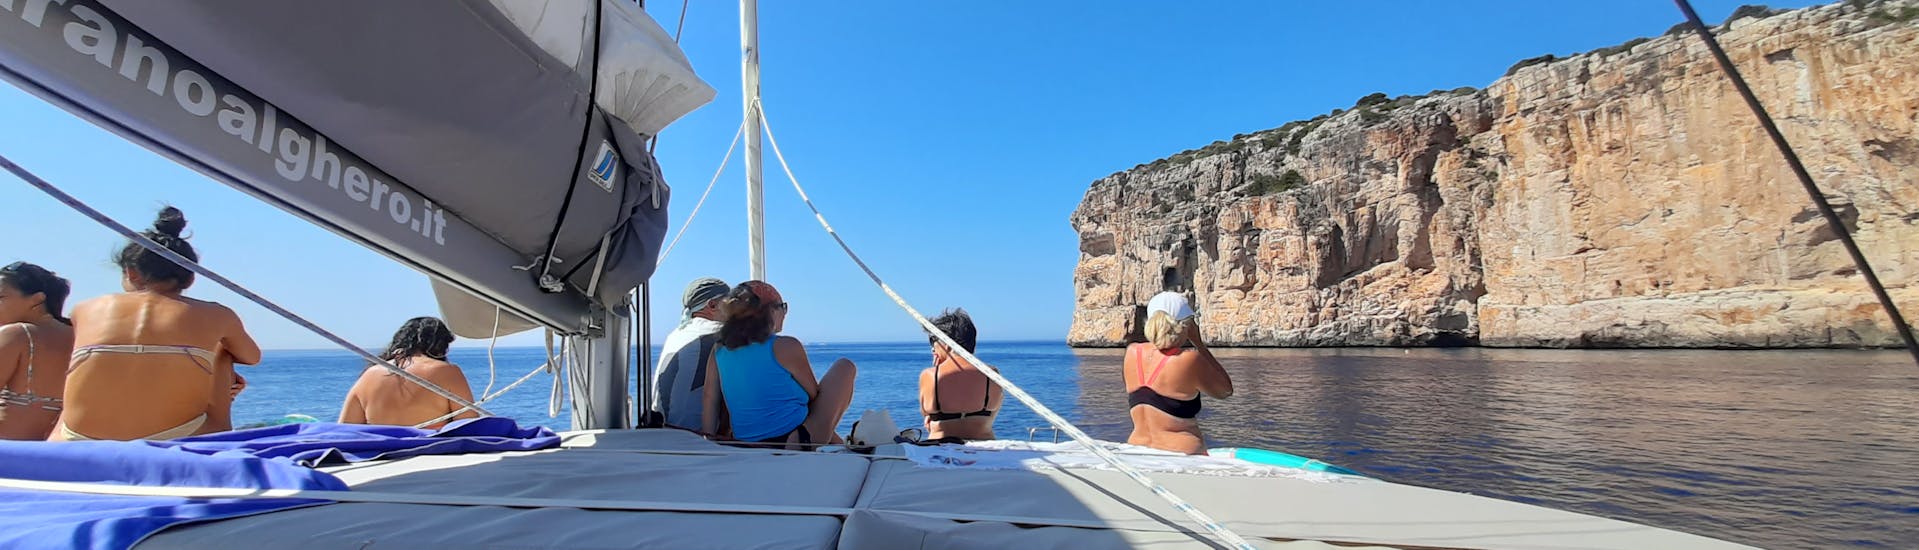 Catamaran Trip in the Gulf of Alghero with Lunch in Cala Dragunara & Snorkeling.